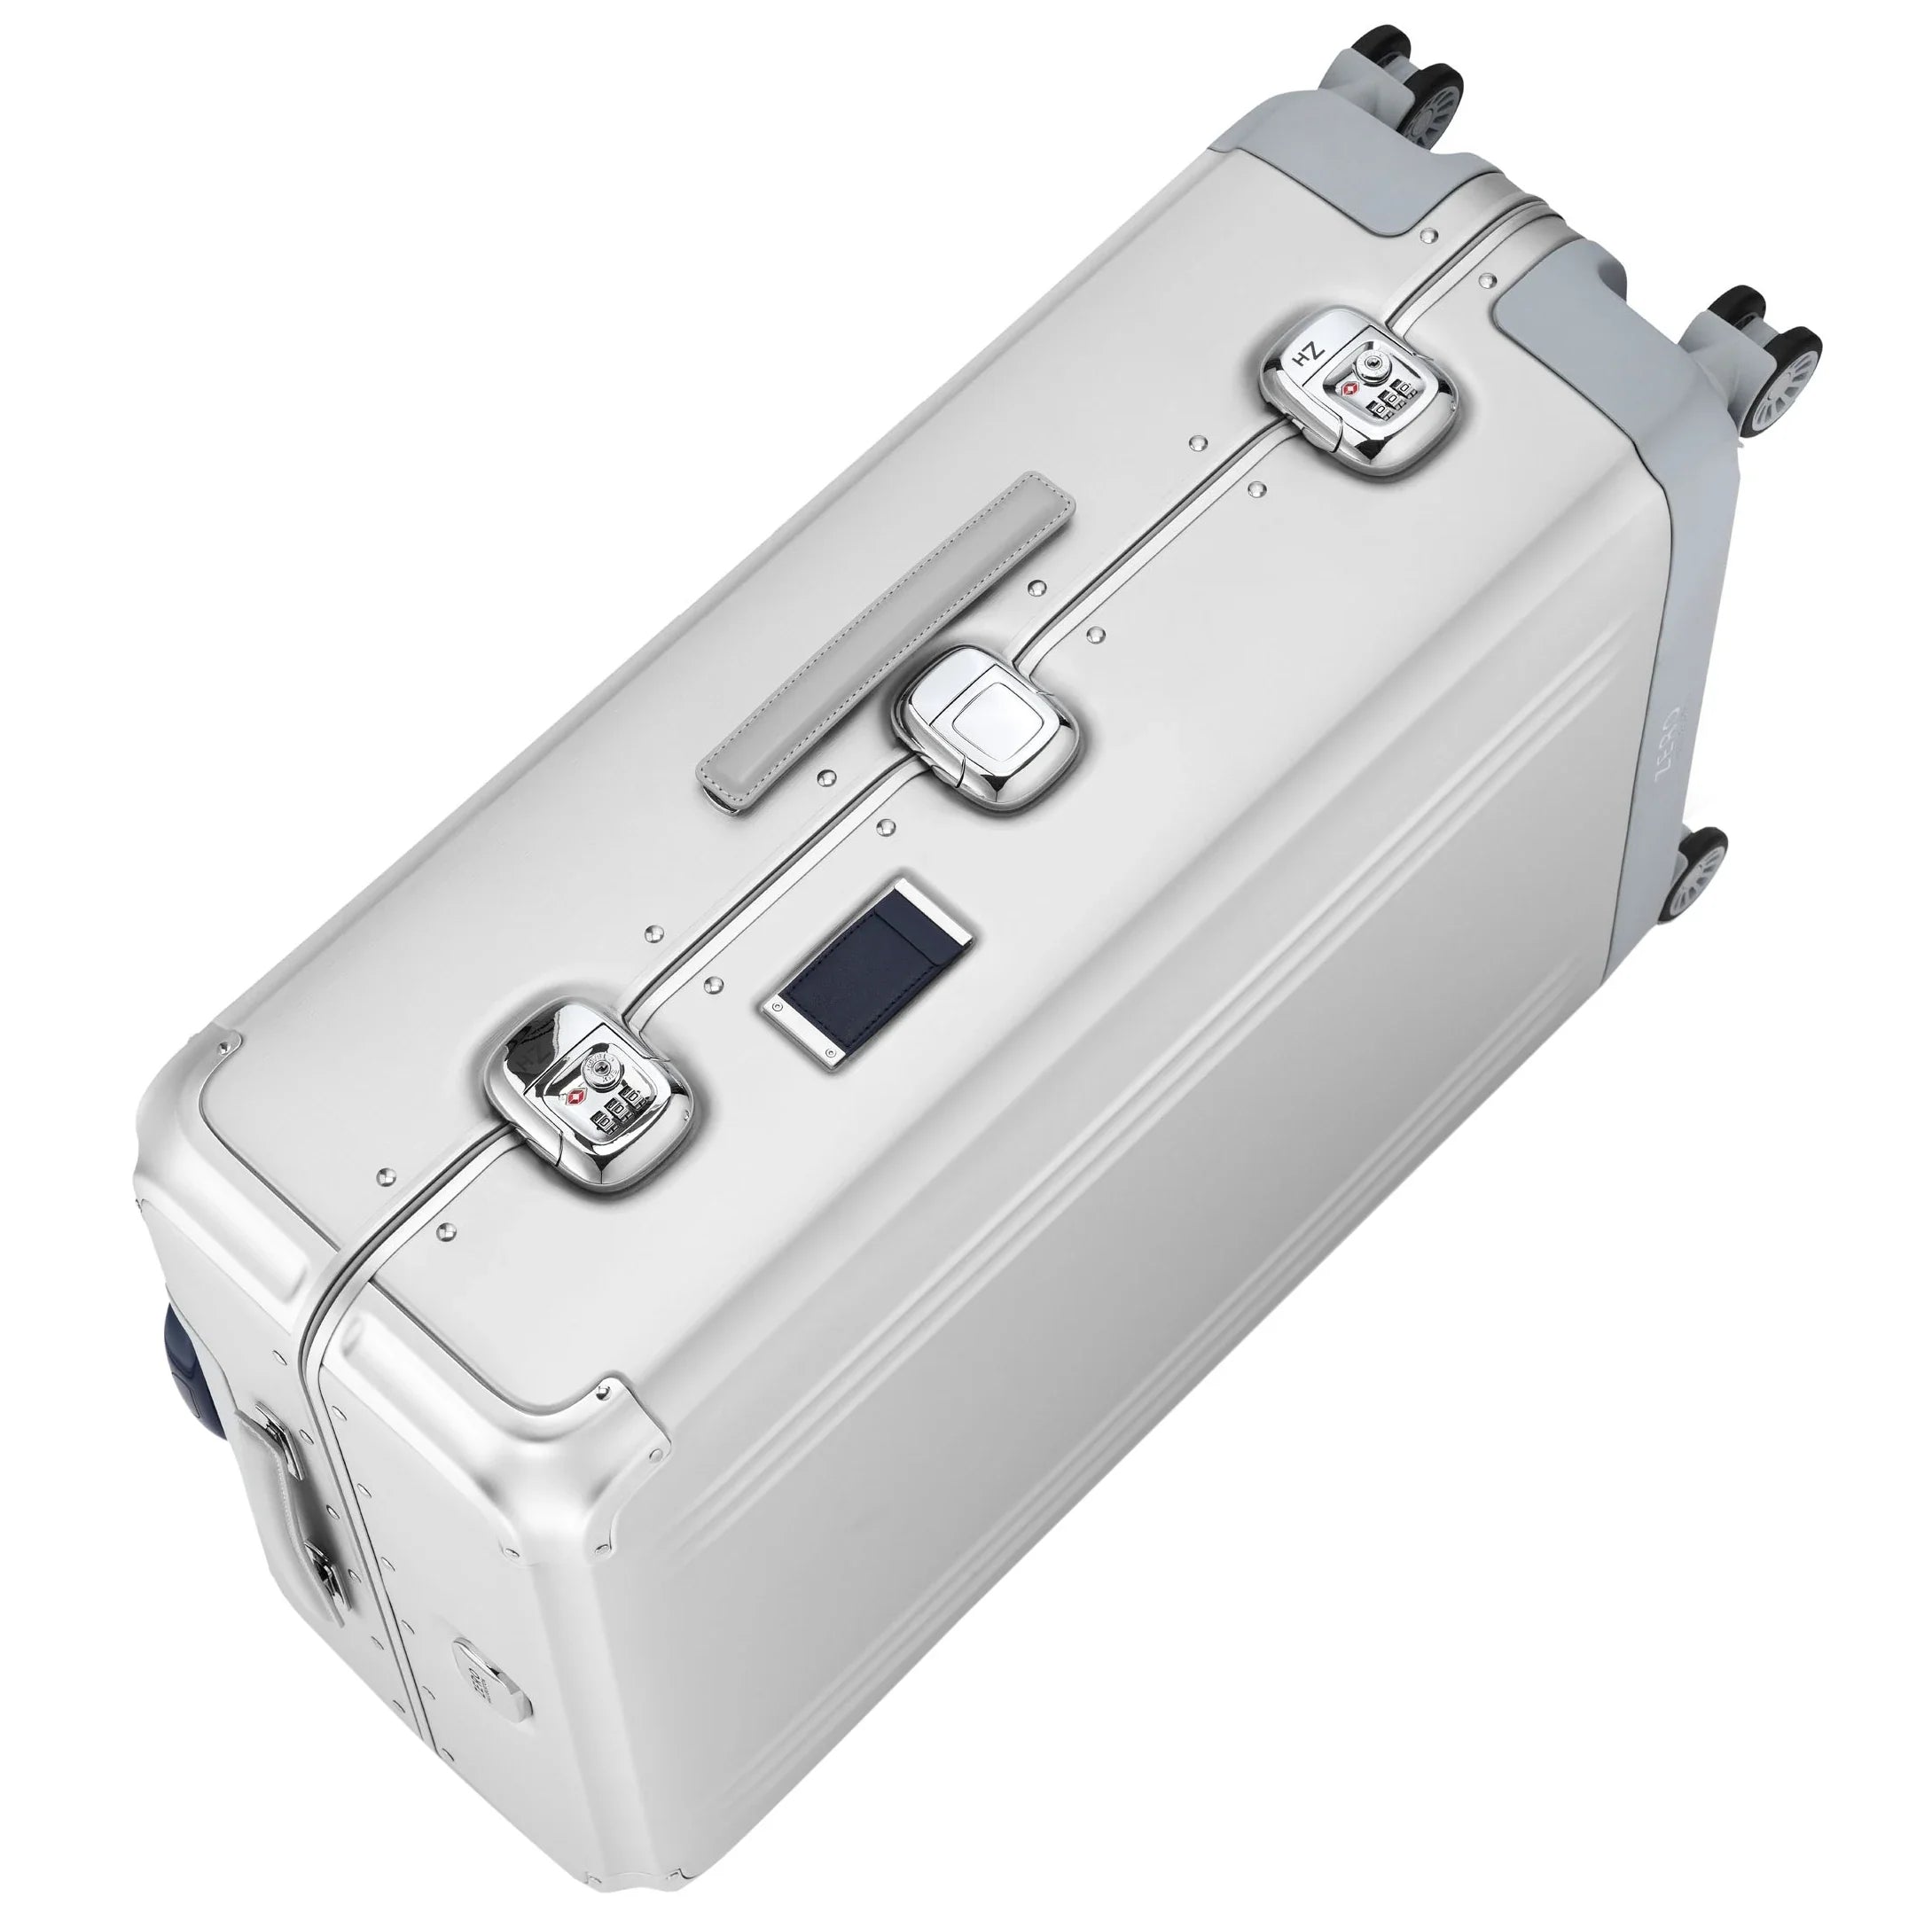 Zero Halliburton Pursuit Check In Luggage 4-Rollen Trolley 77 cm - Silver